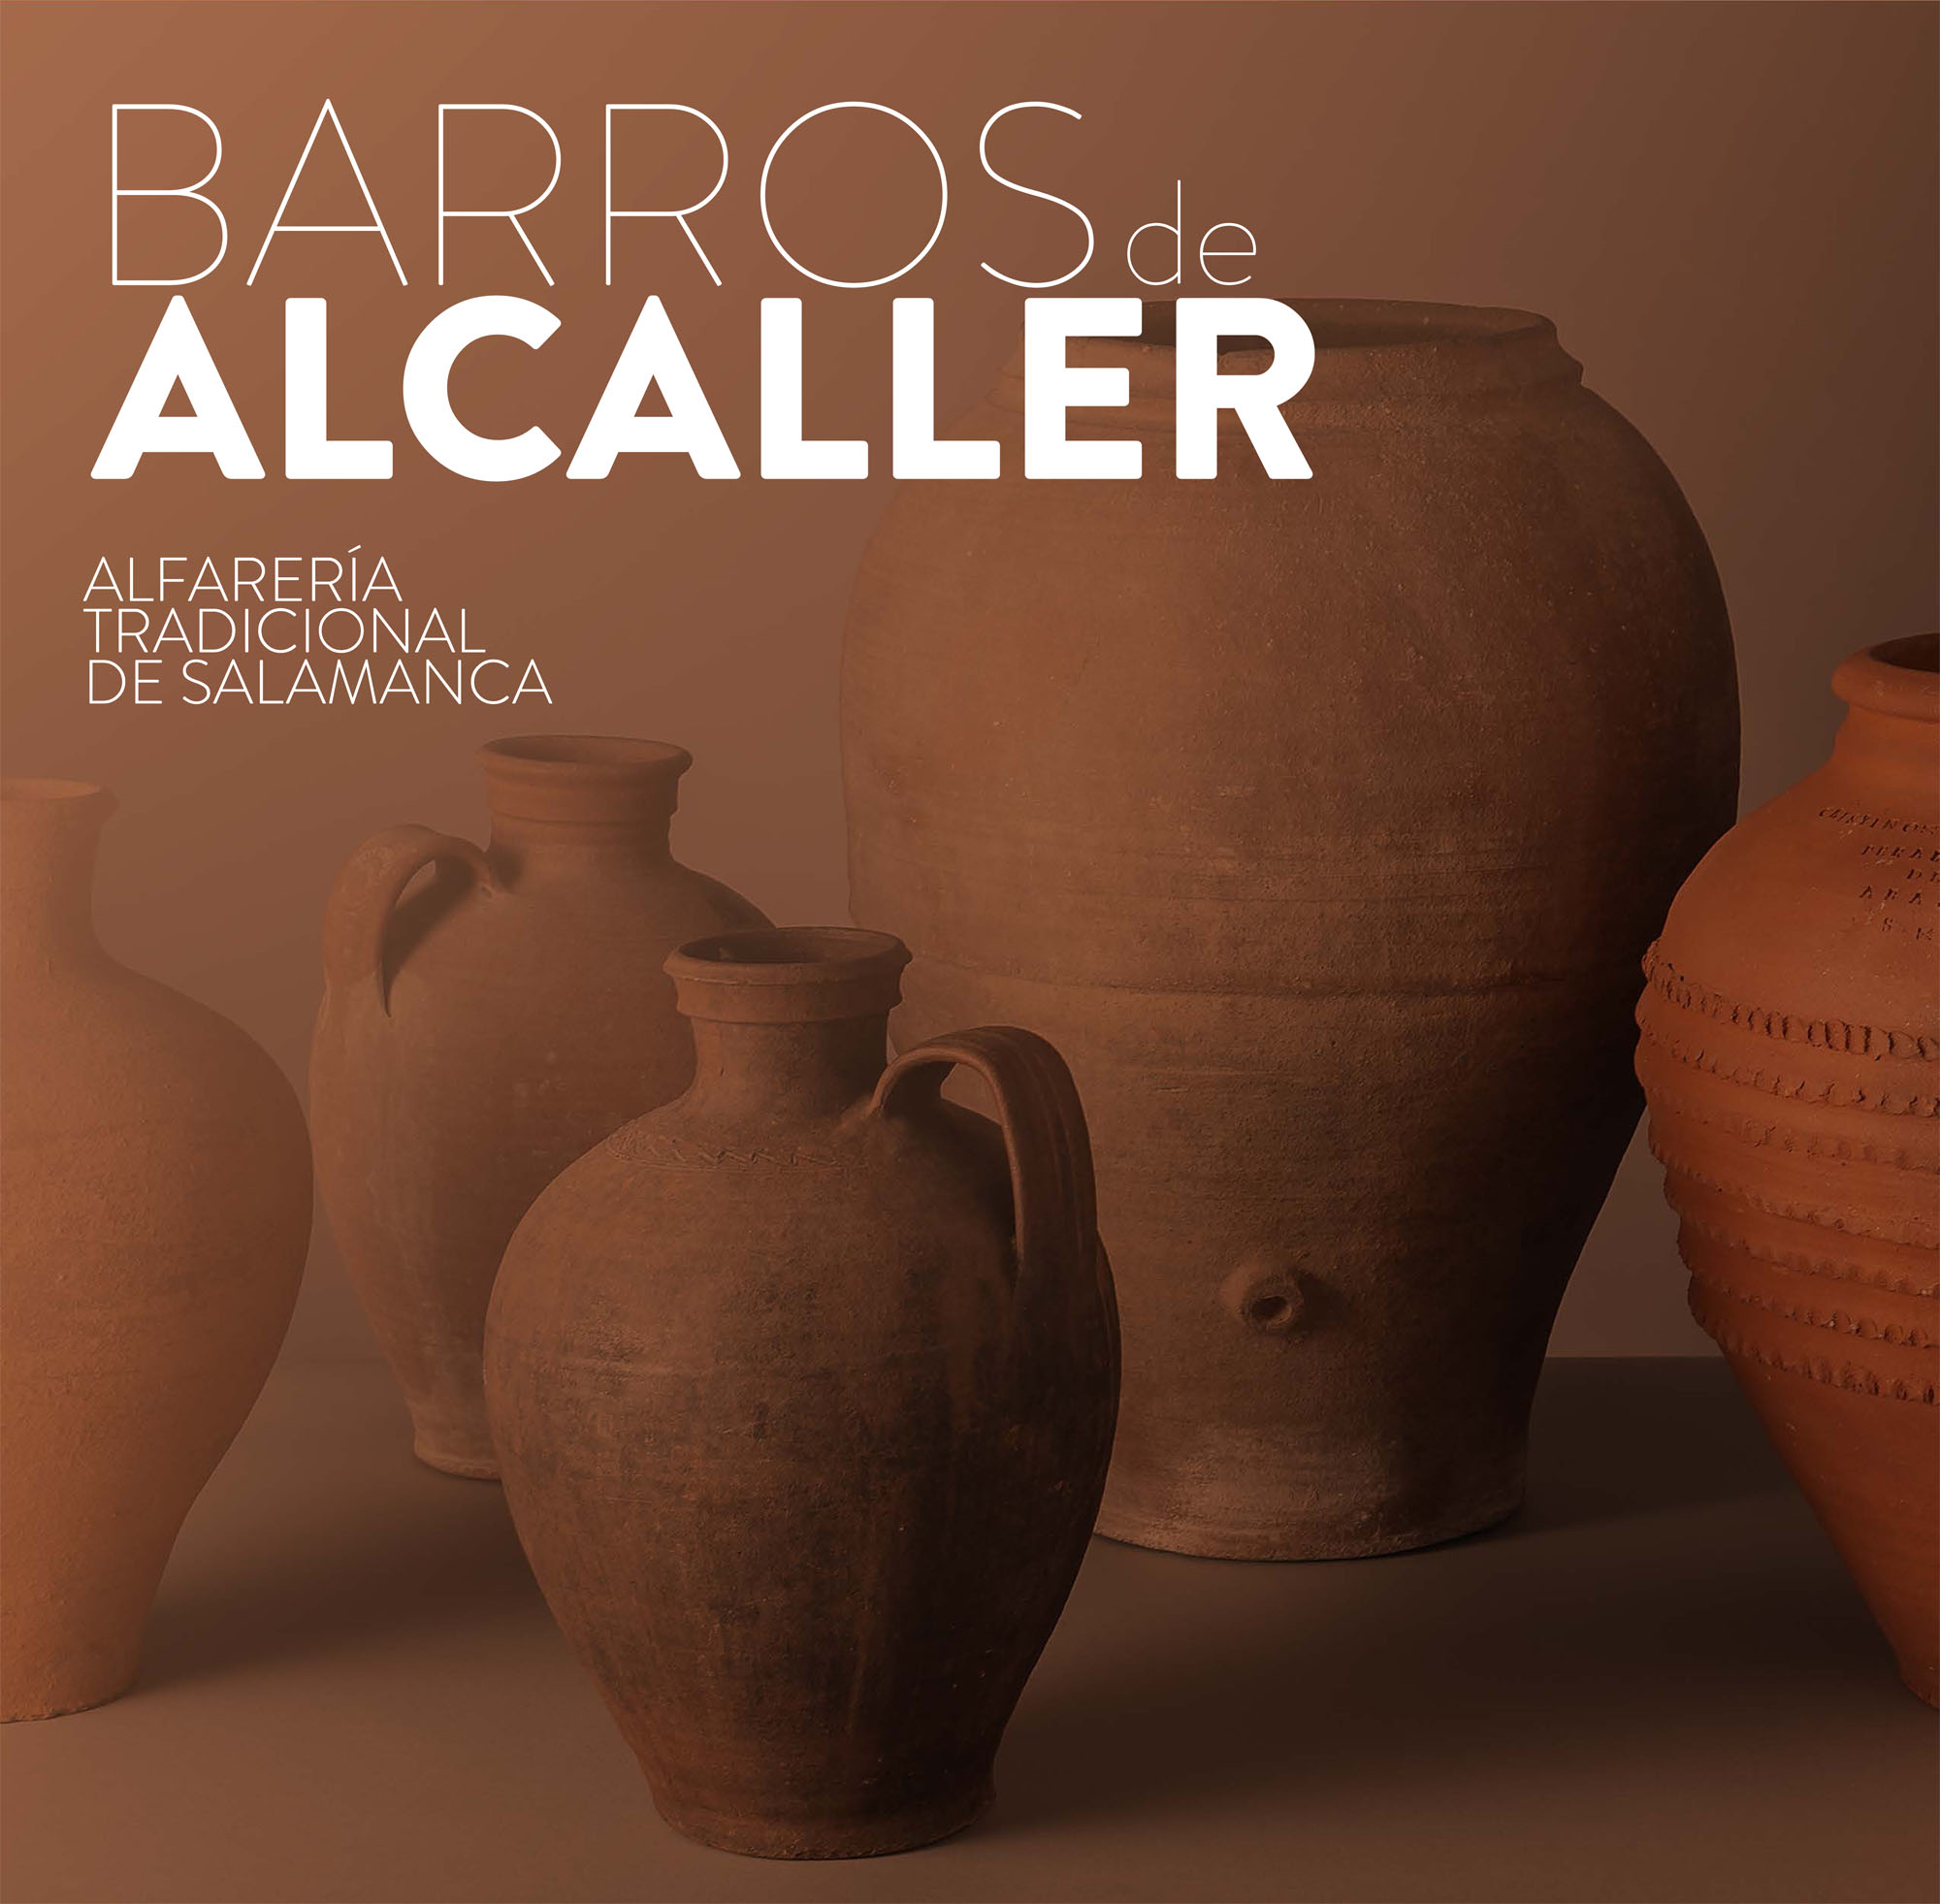 Museo de Salamanca | Barros de Alcaller. Alfarería tradicional de Salamanca | 2 de noviembre de 2021